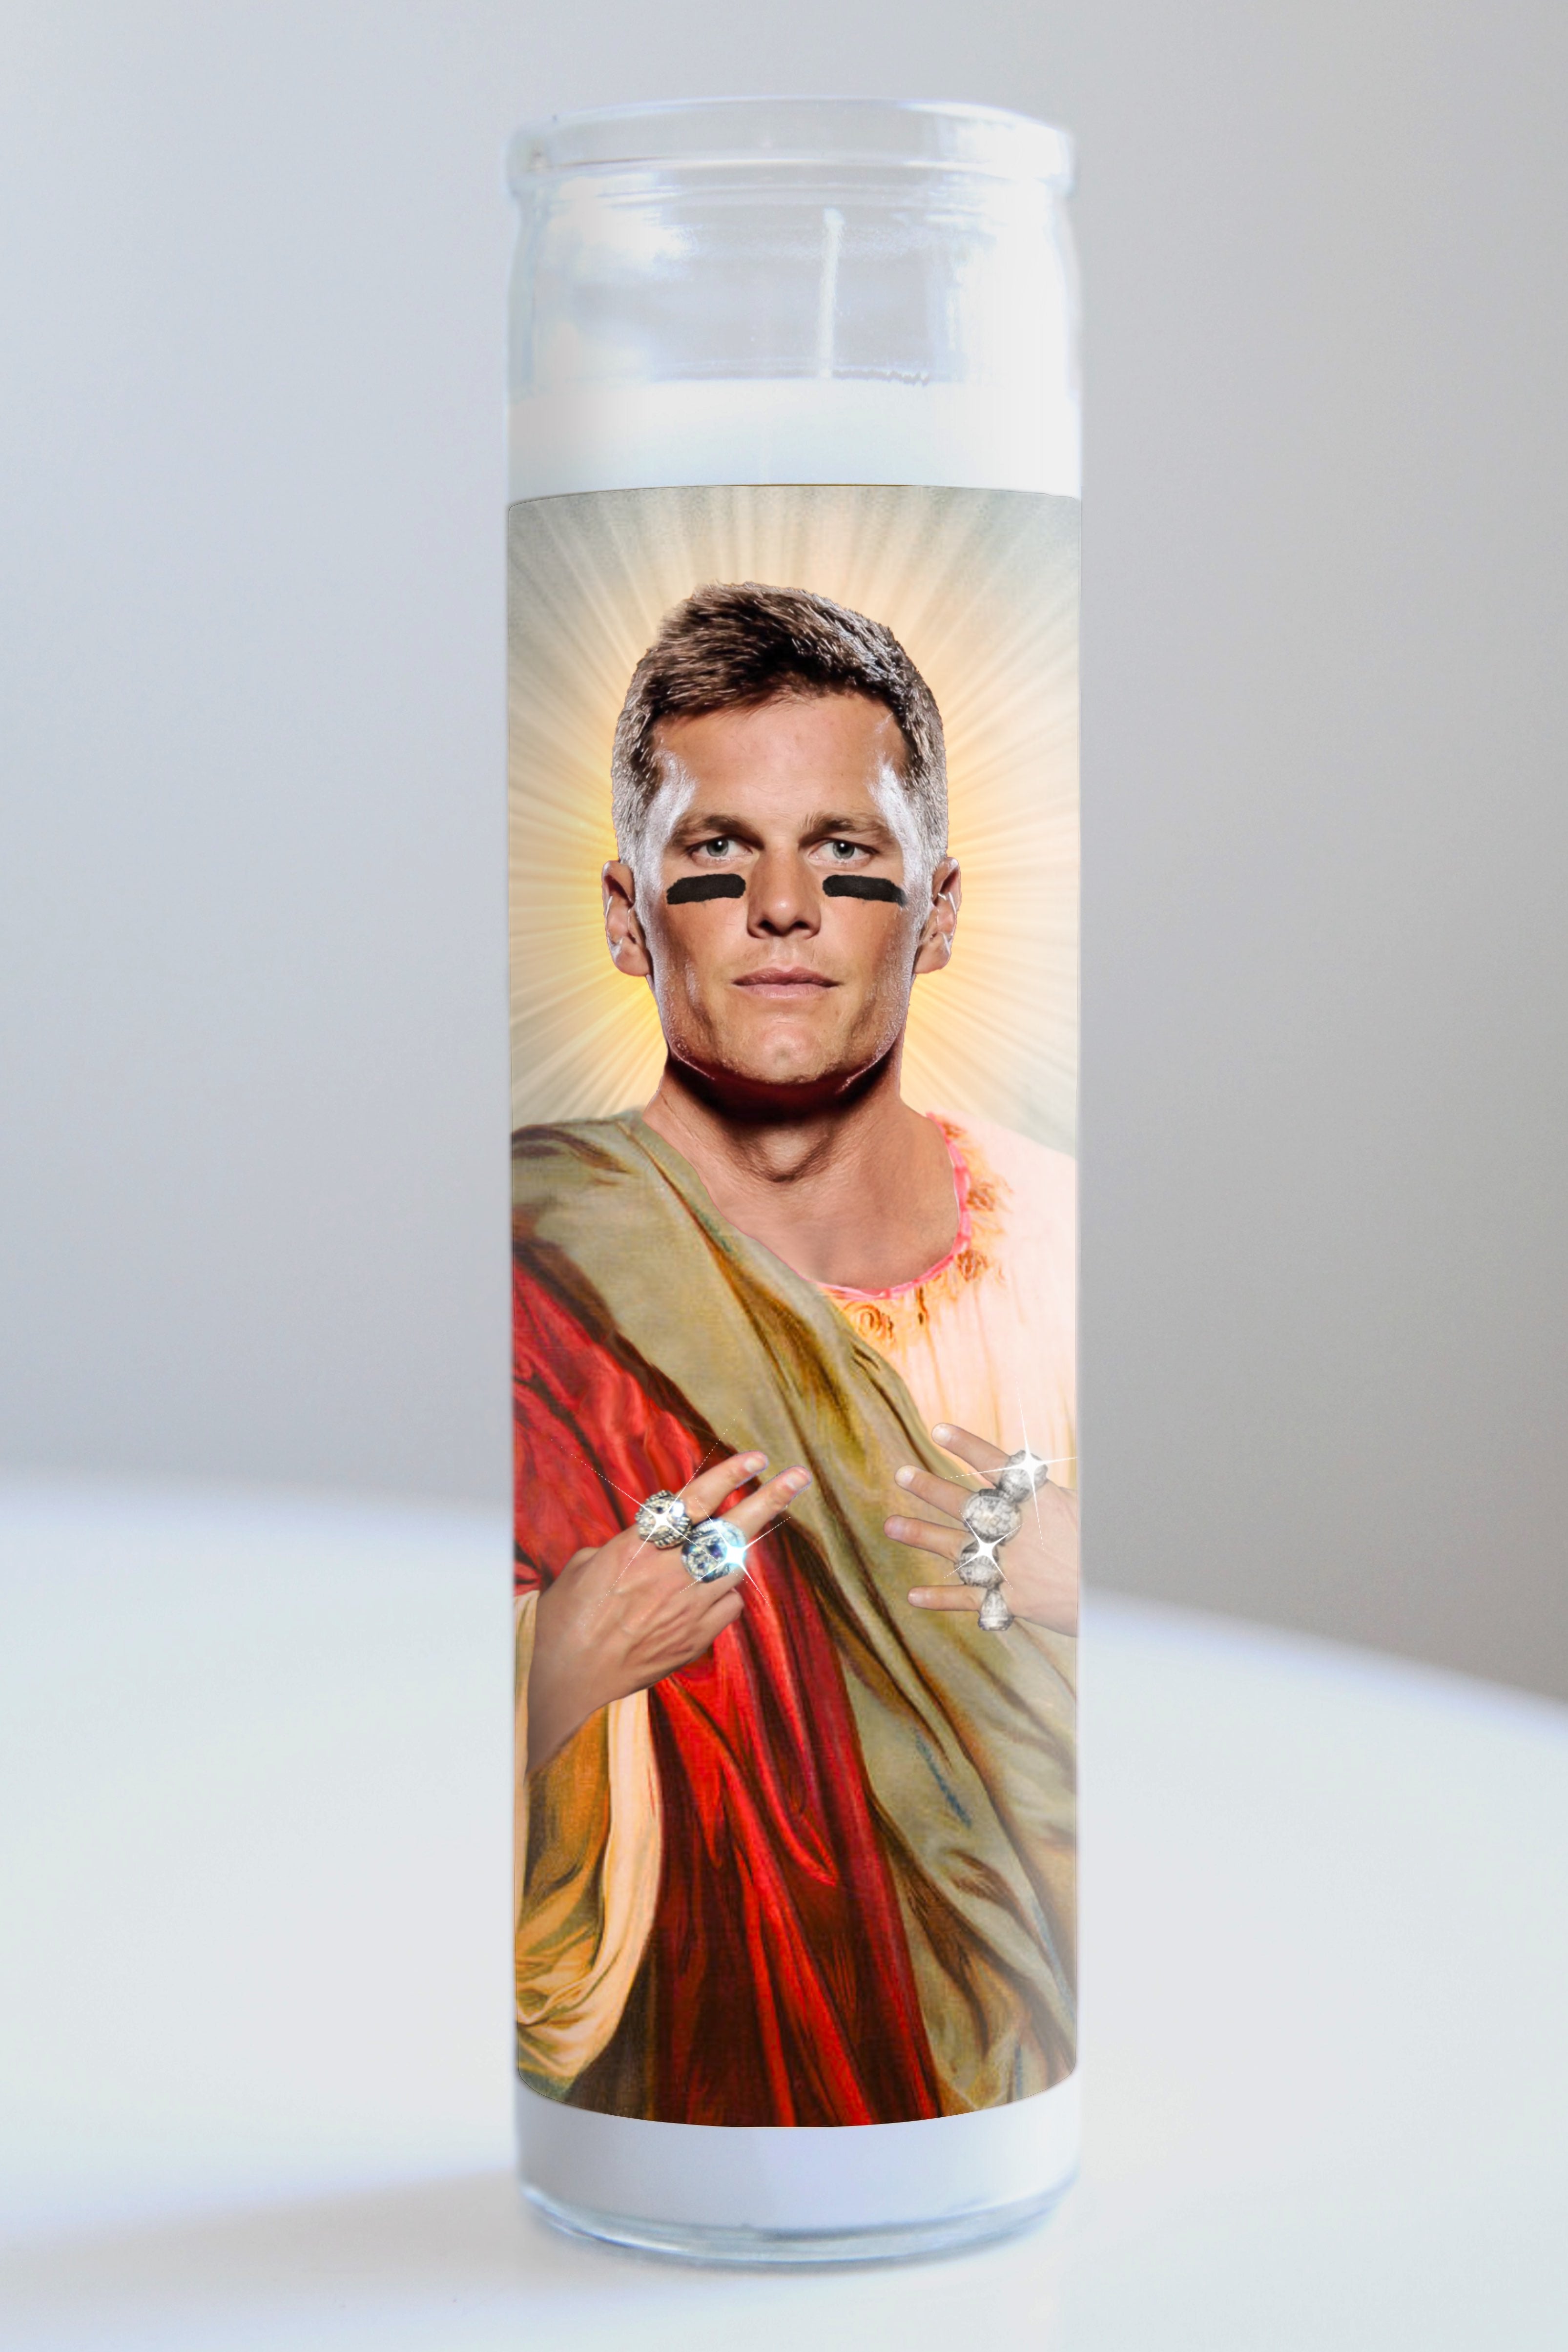 Tom Brady 7 Rings Candle – Illuminidol